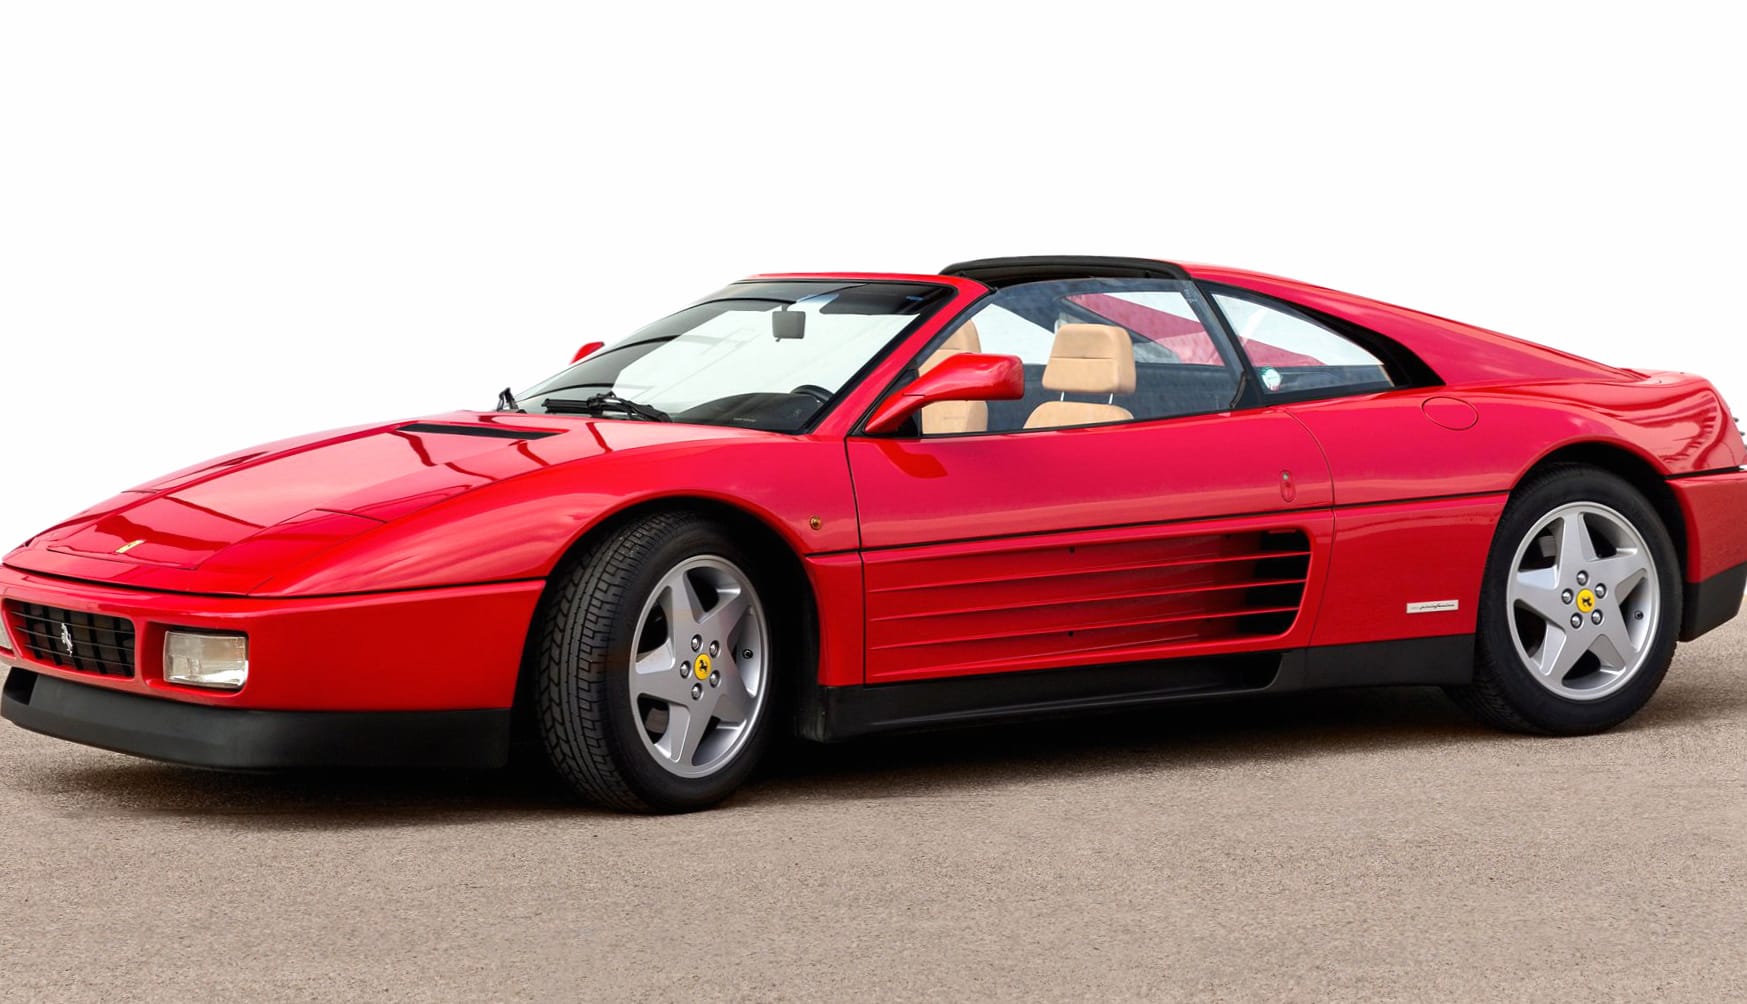 Ferrari 348 TS at 1152 x 864 size wallpapers HD quality